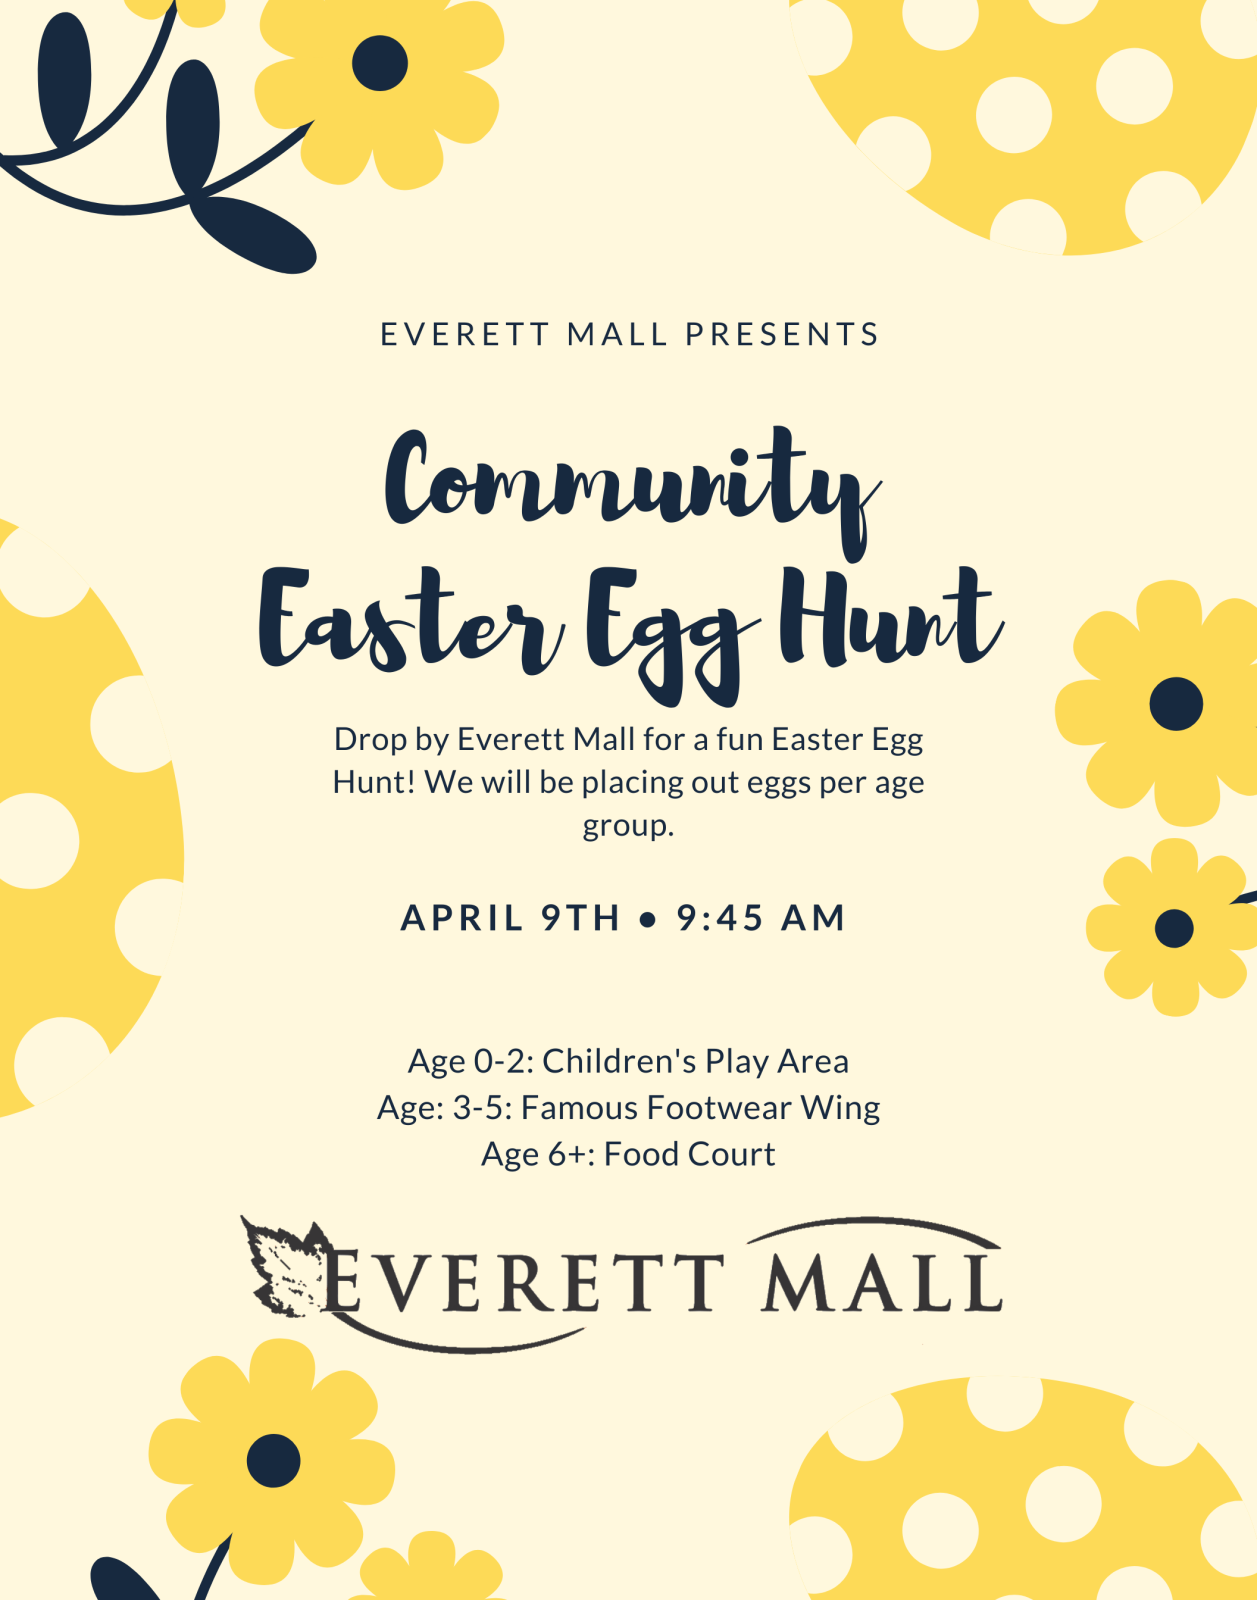 Event Promo Photo For Community Easter Egg Hunt